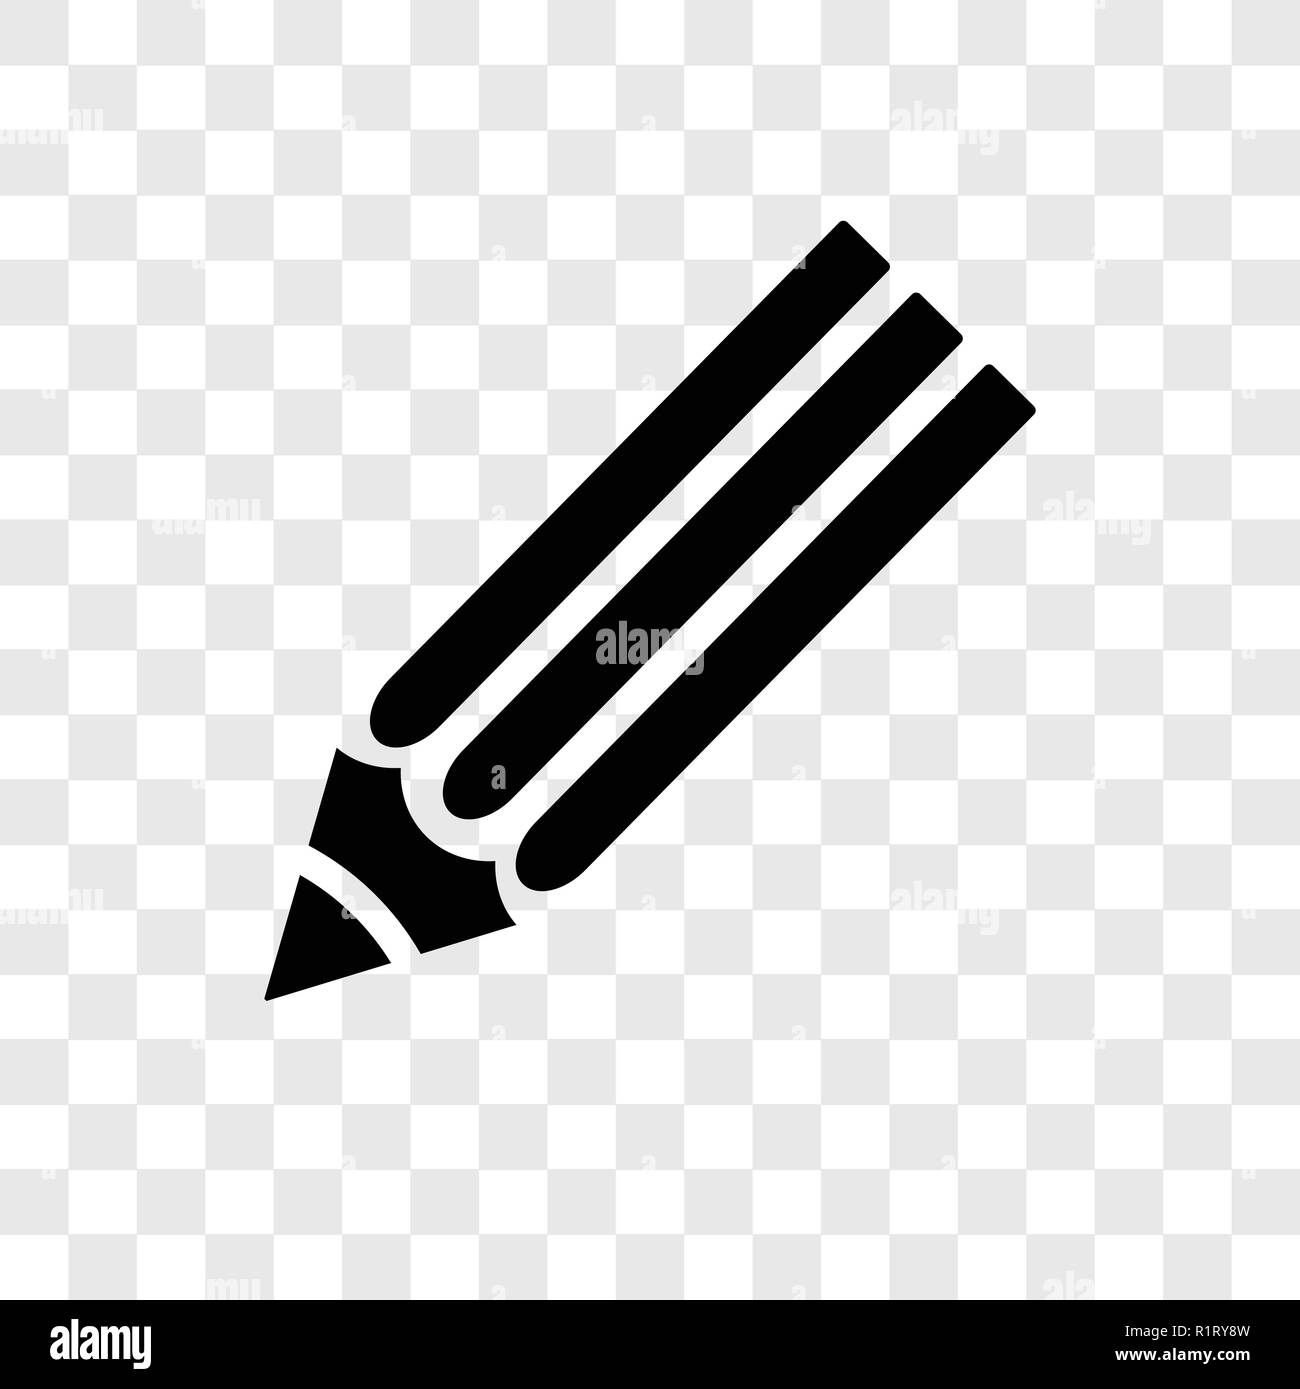 Pencil Logos - 1145+ Best Pencil Logo Ideas. Free Pencil Logo Maker. |  99designs